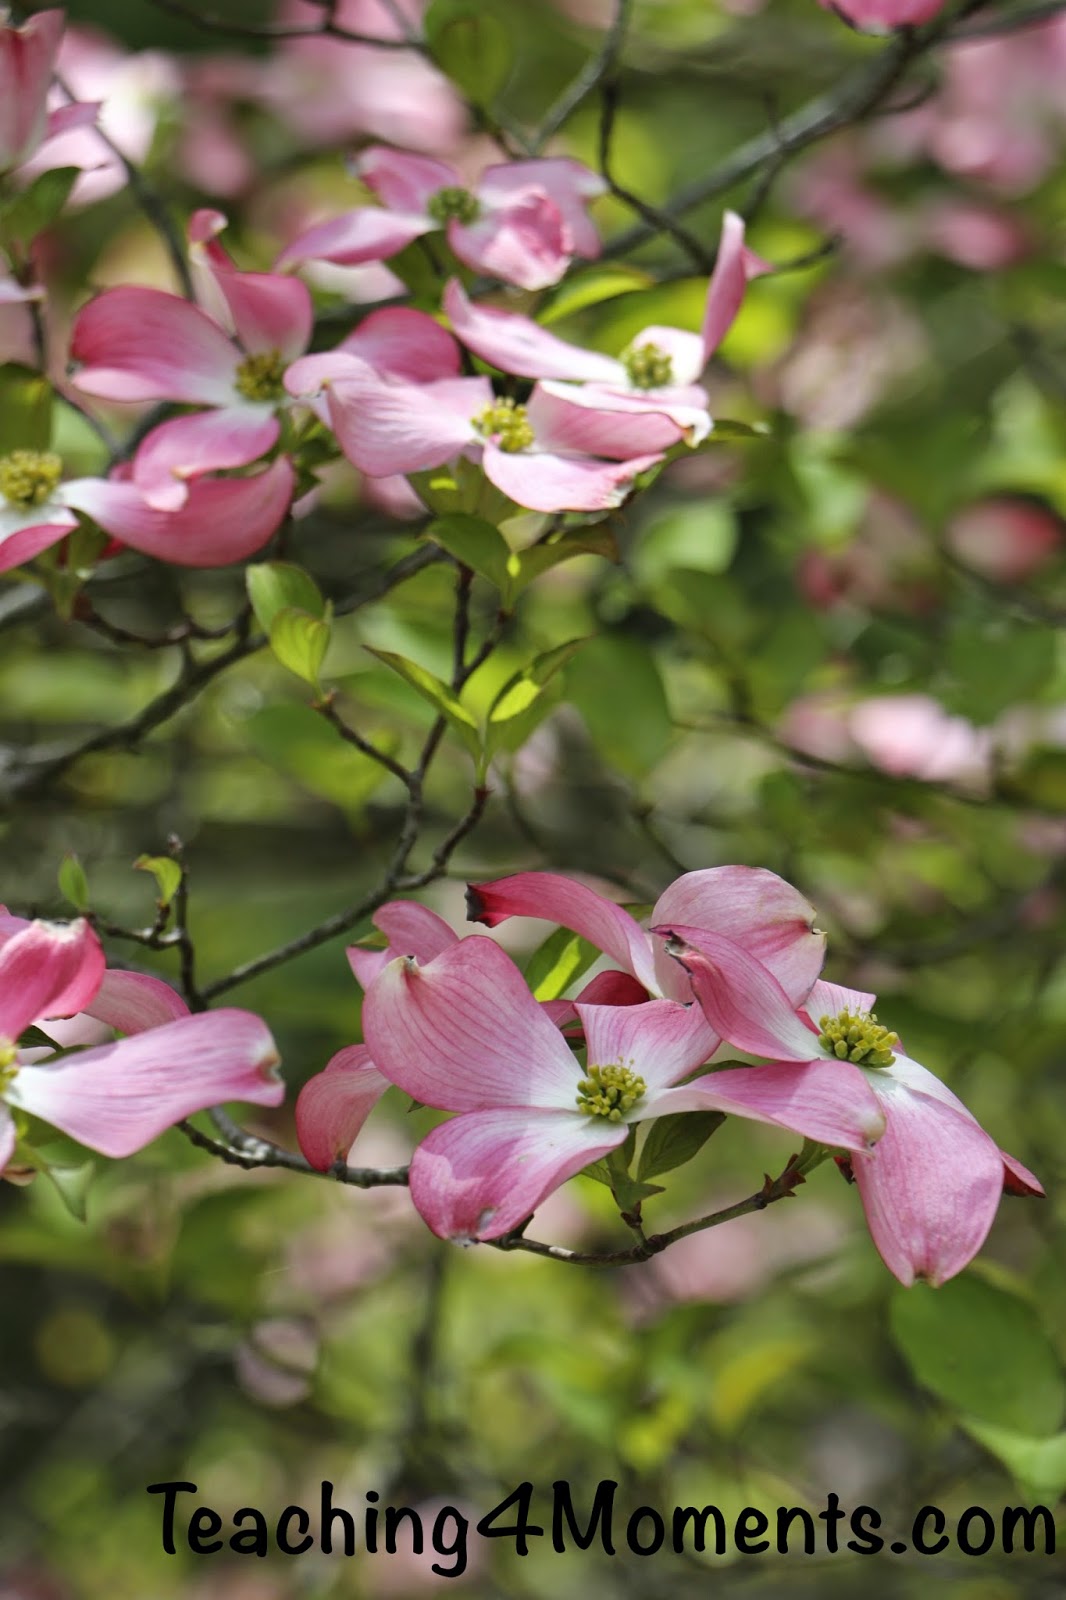 Teaching 4 Moments-Pink flowering Dogwood tree